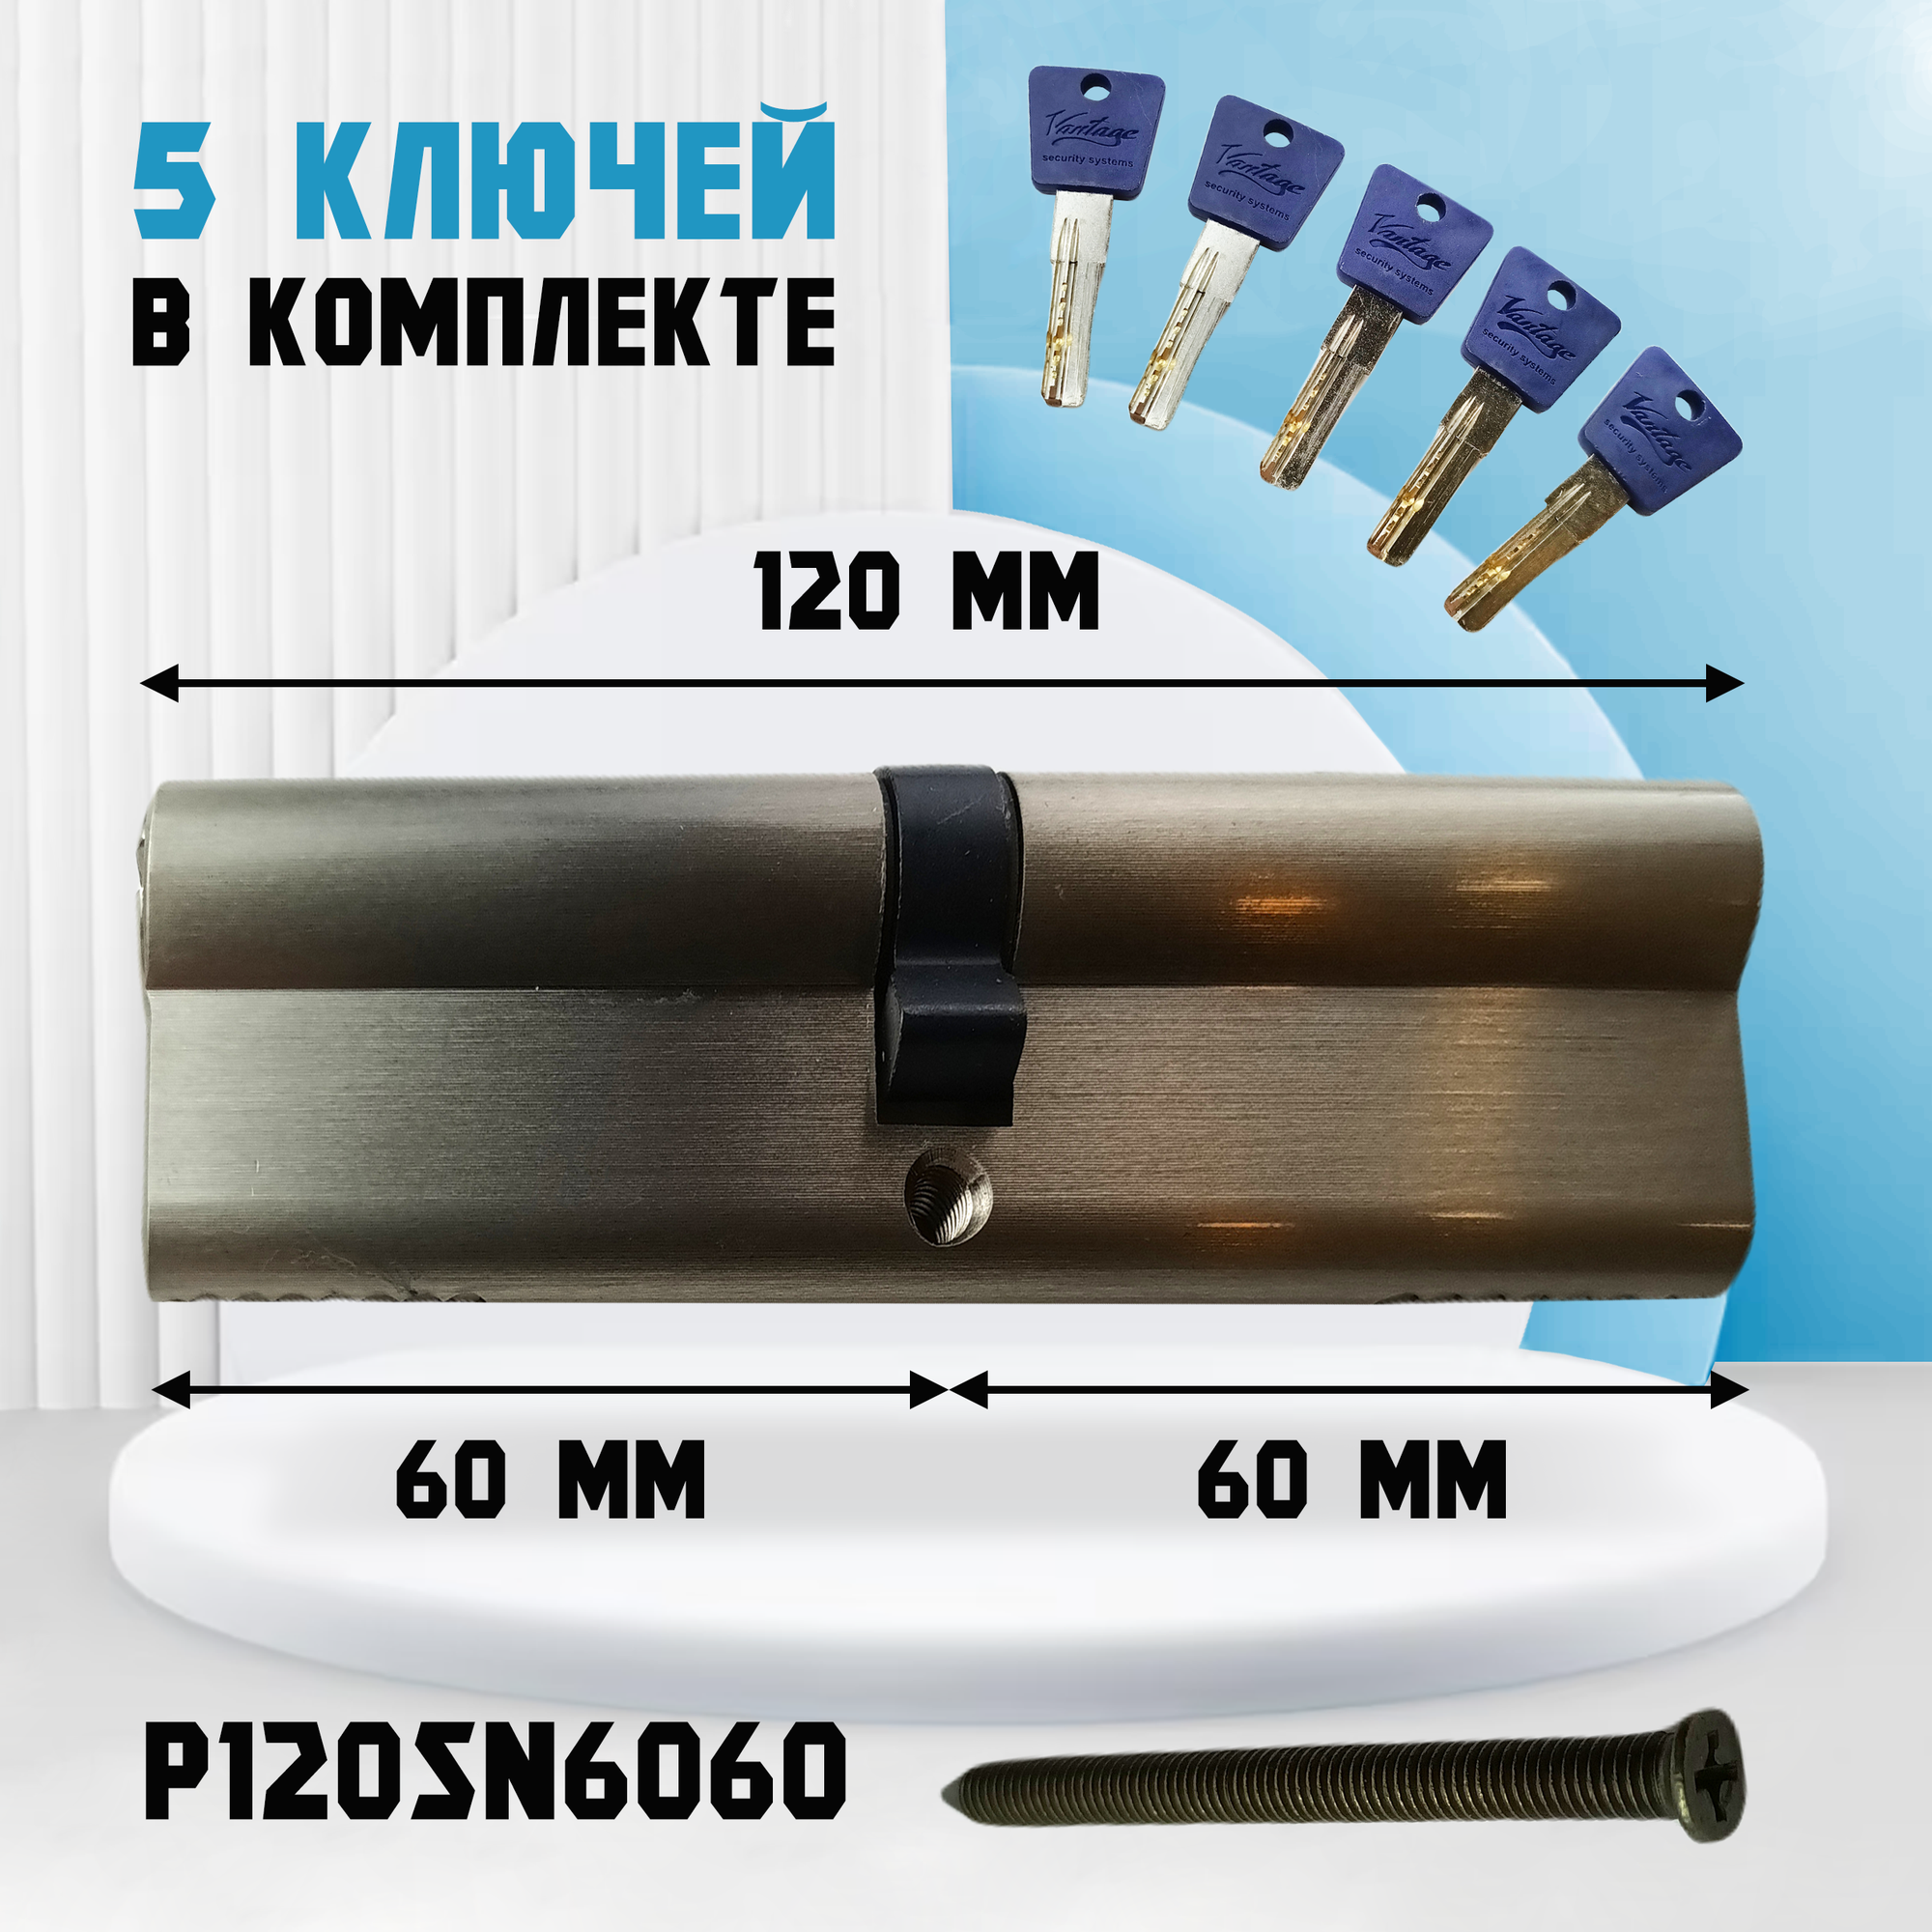 Личинка замка (цилиндр) Vantage P 120 SN к/к